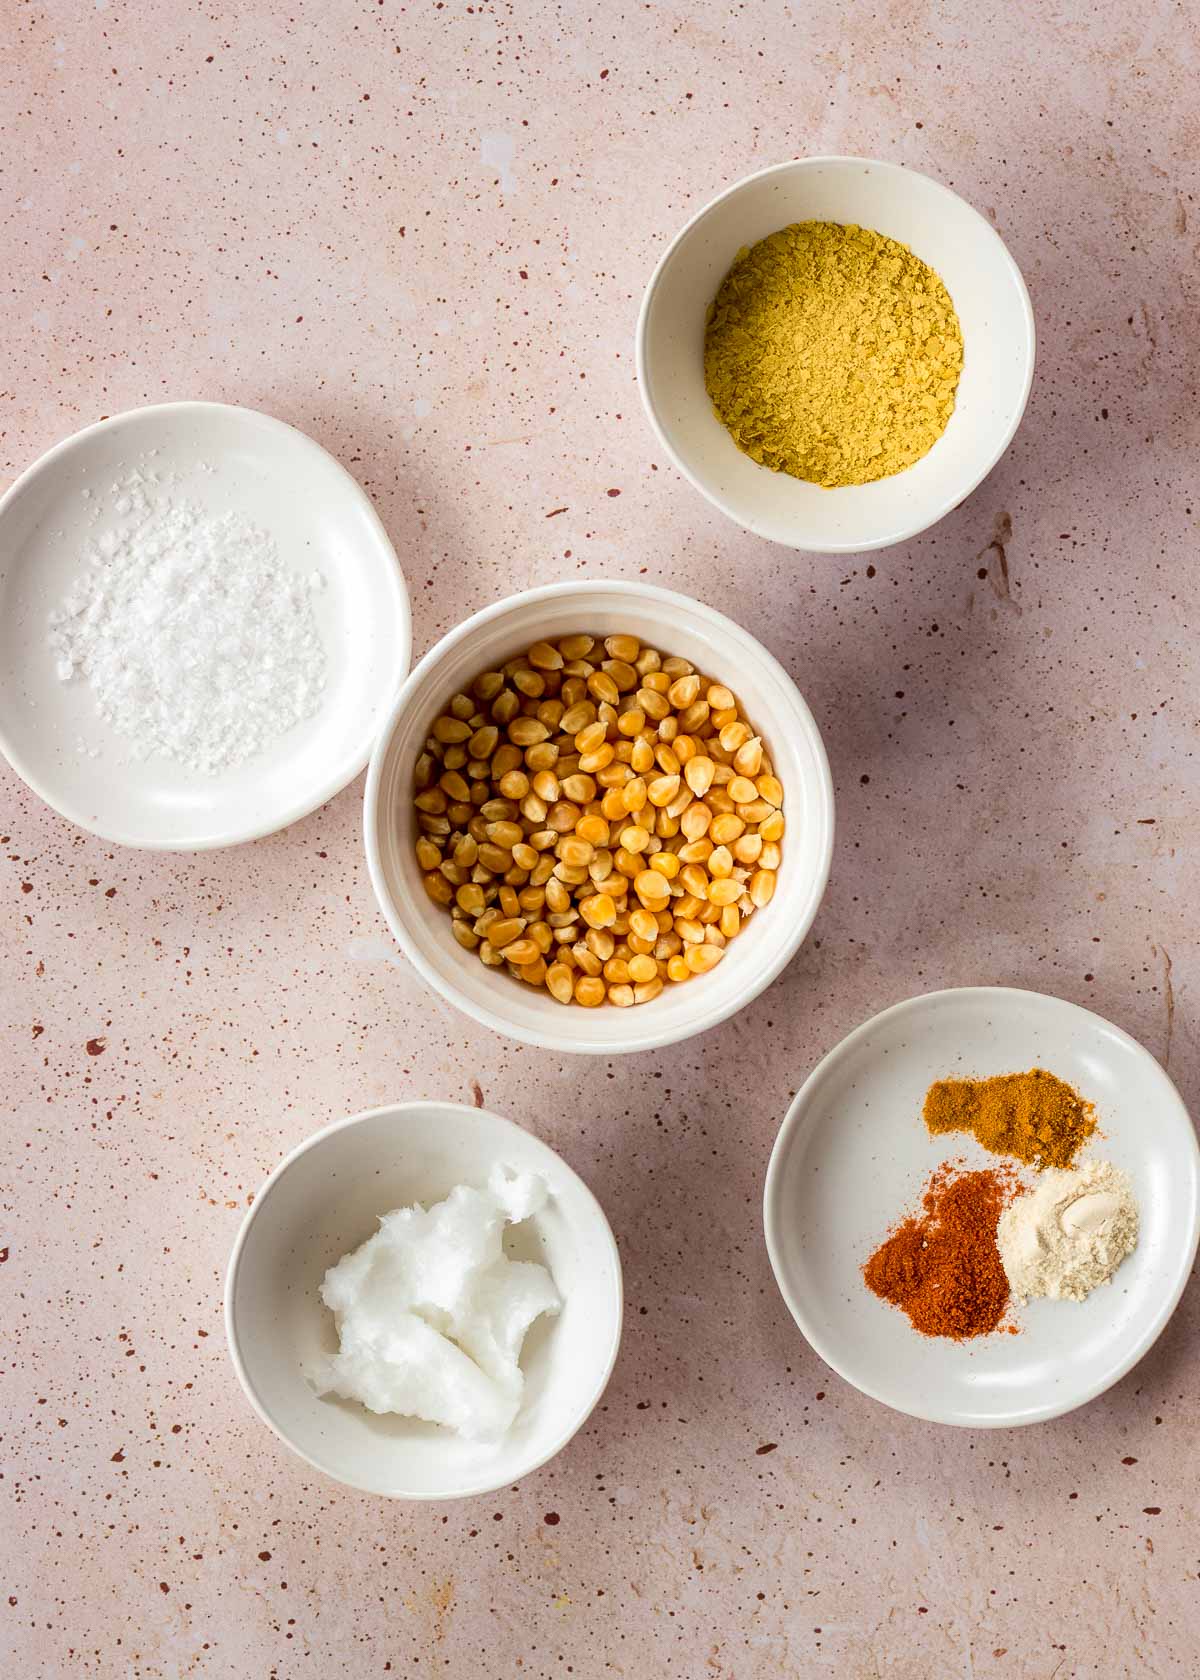 Ingredients to make vegan popcorn, including corn kernels, nutritional yeast, coconut oil, smoked paprika and salt.